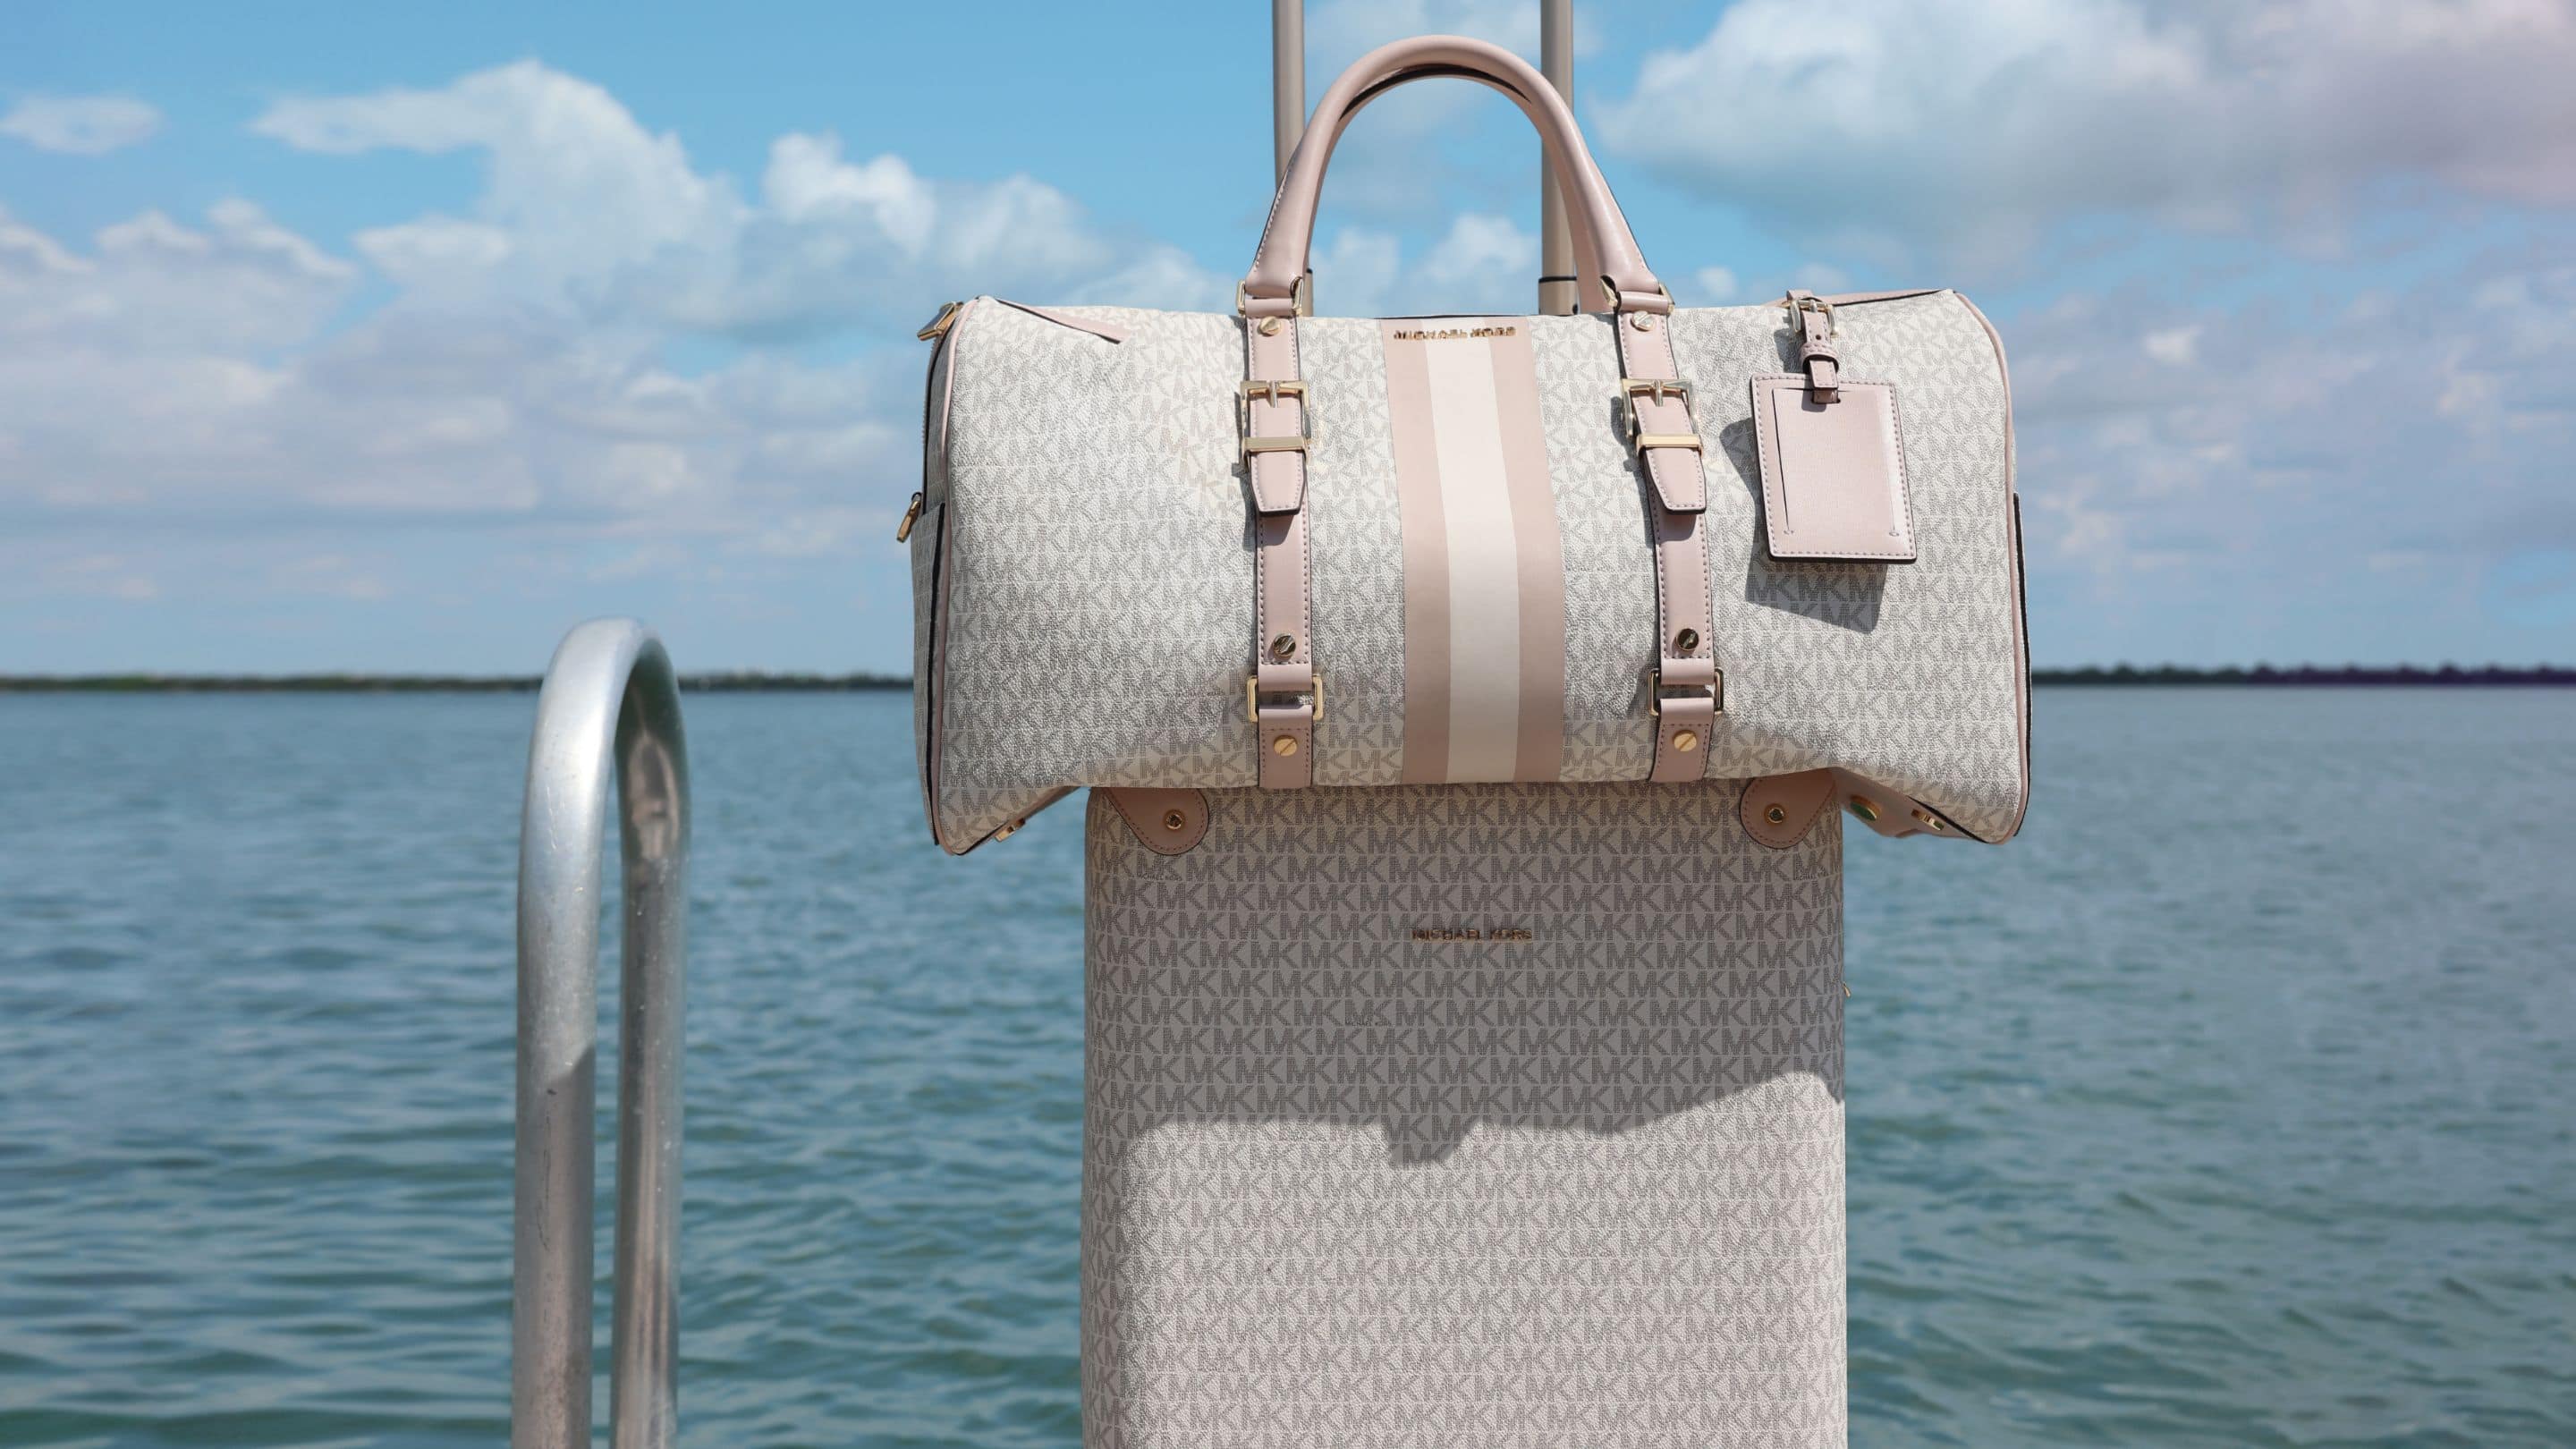 Michael Kors USA: Designer Handbags, Clothing, Menswear, Watches 